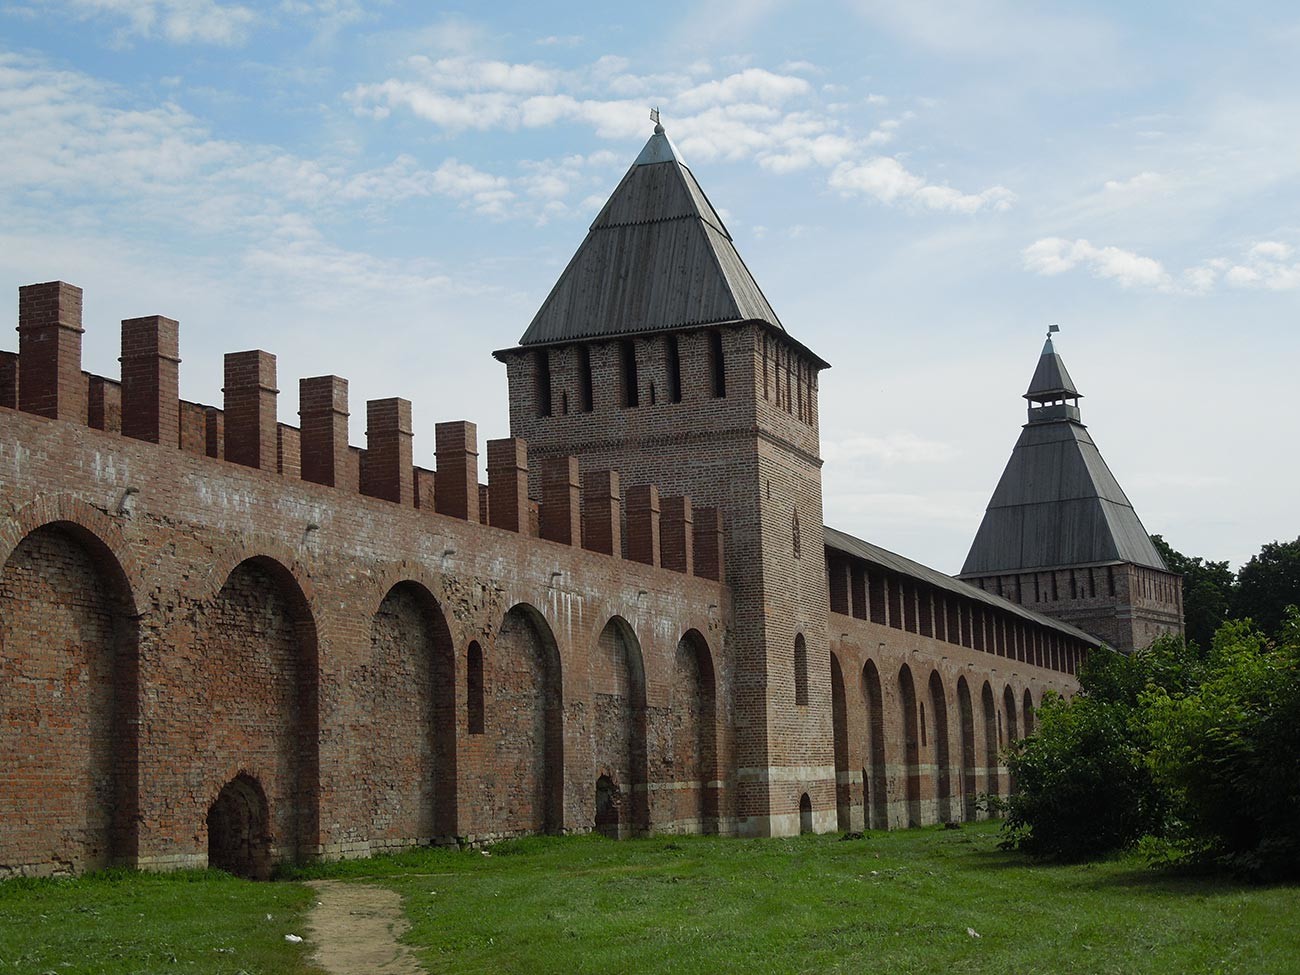 The Smolensk Citadel